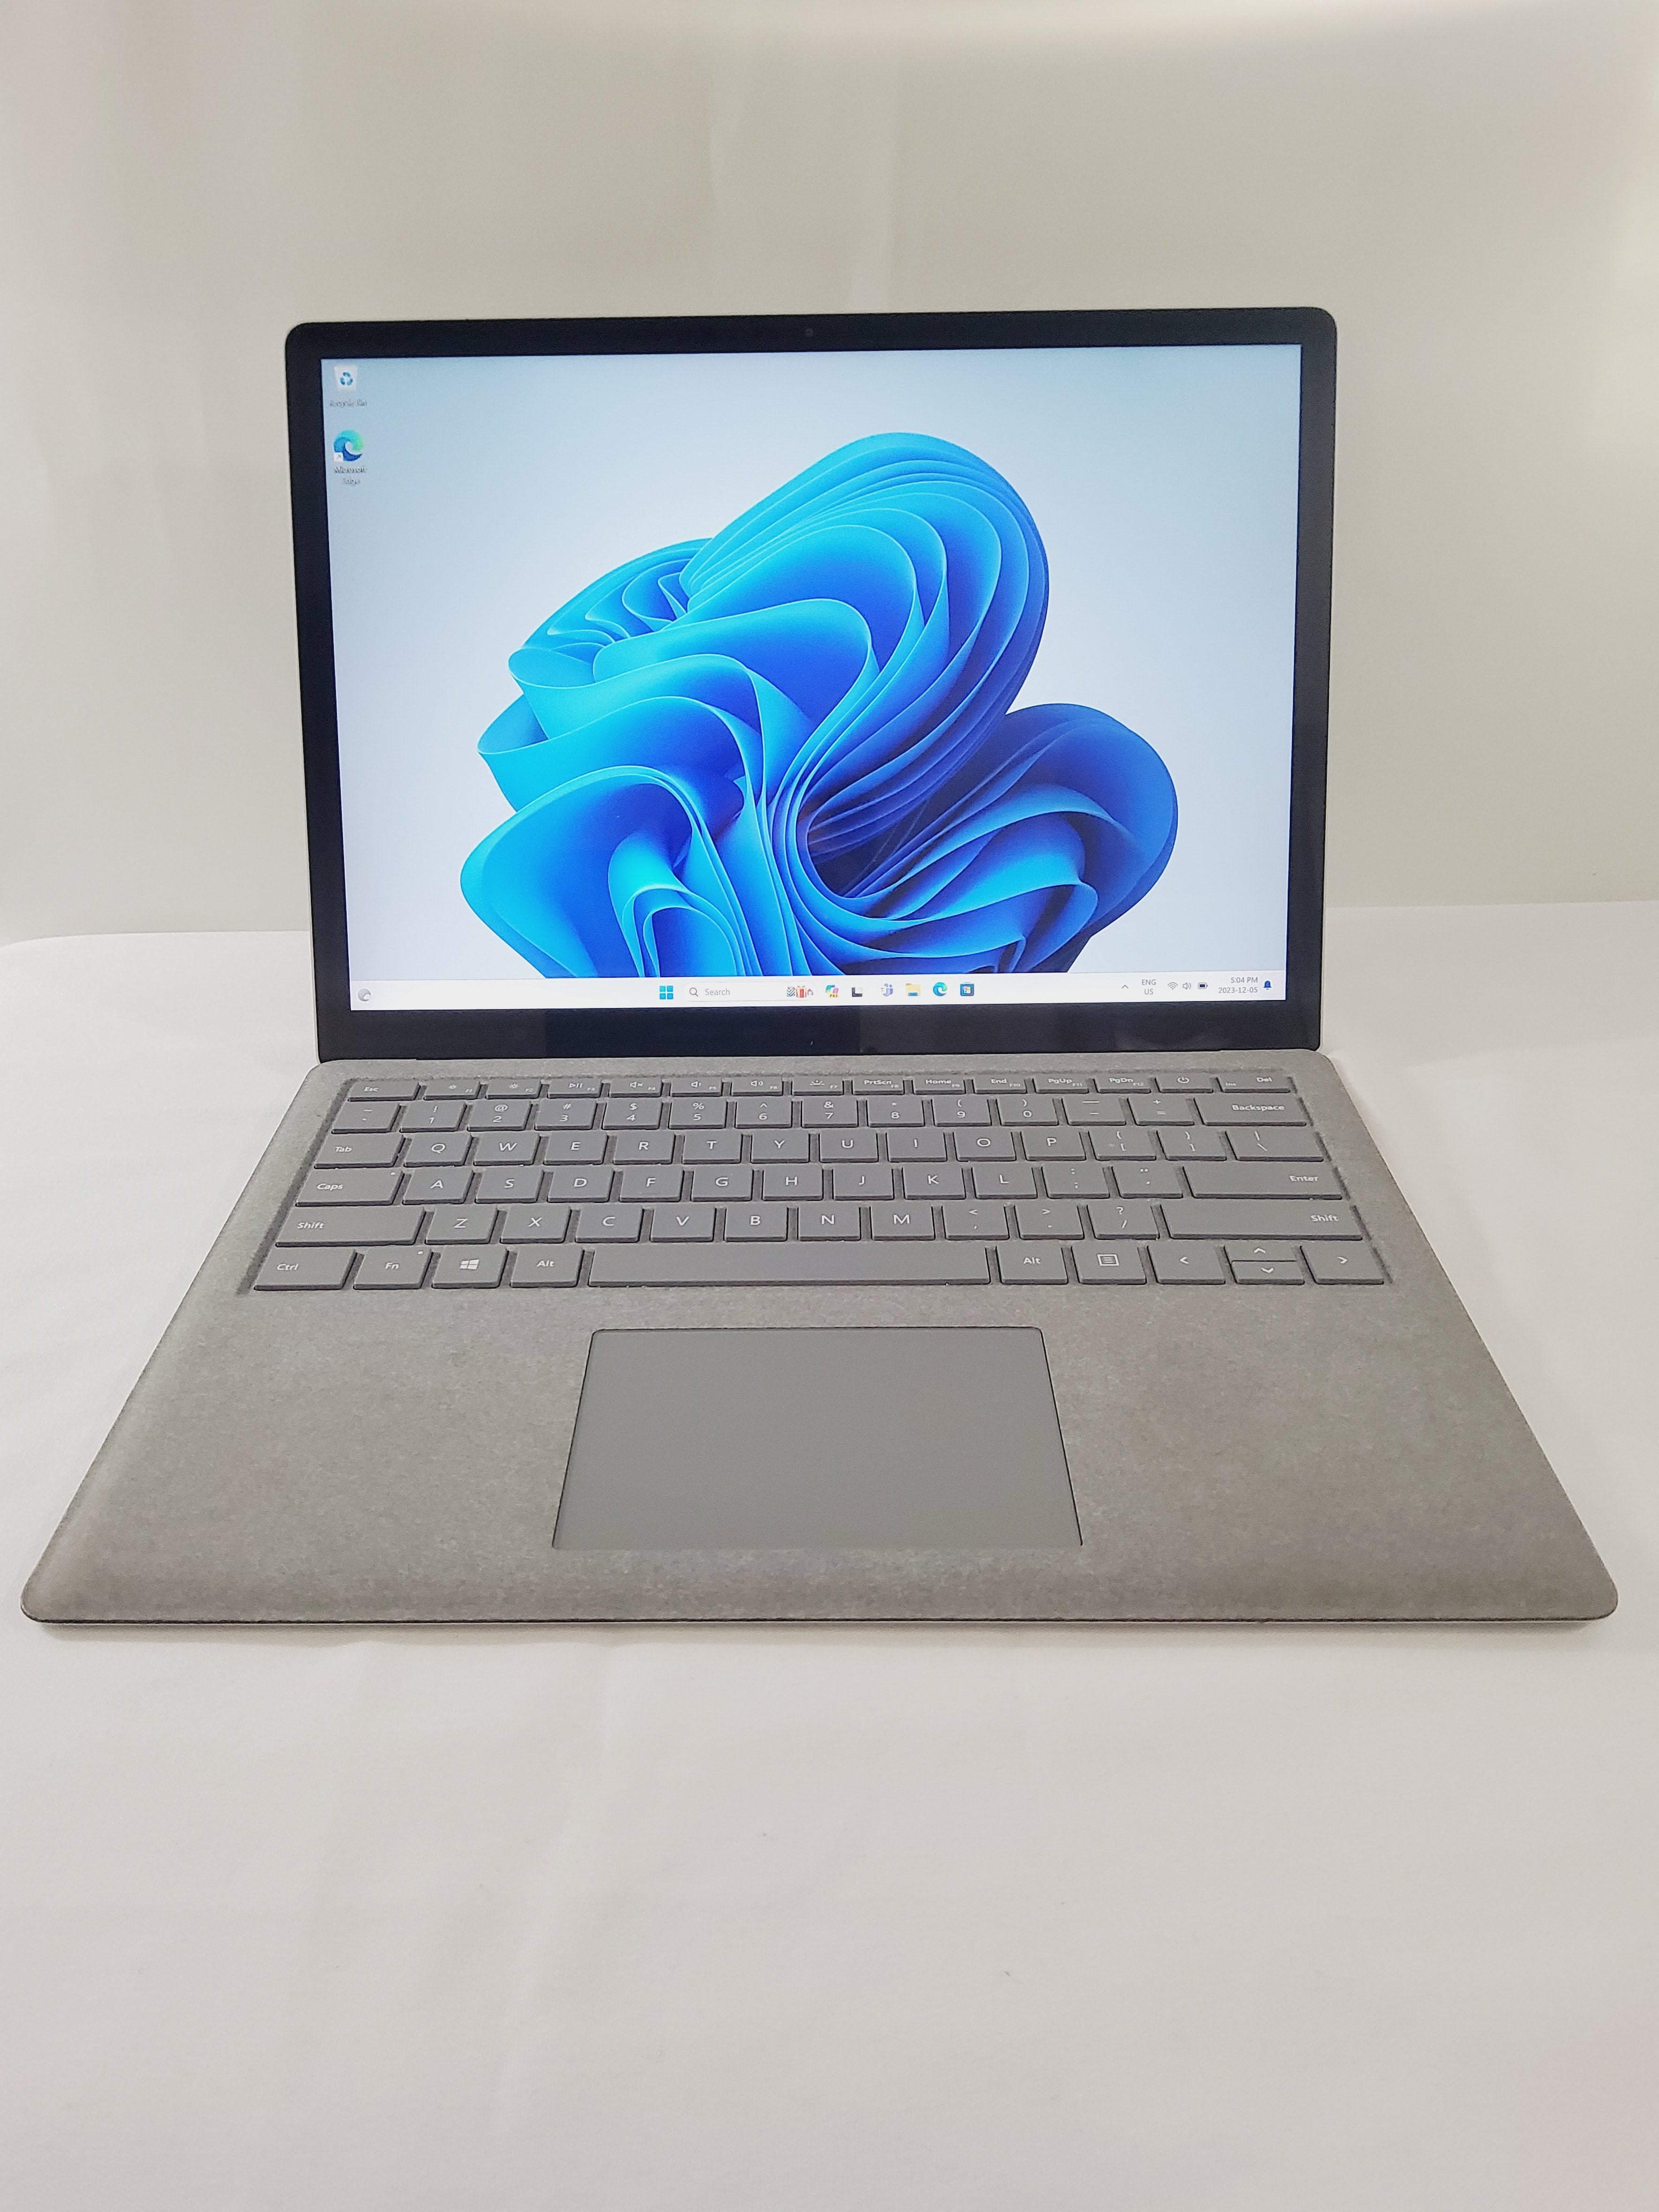 Microsoft Surface Laptop 2 13.5" Touchscreen Laptop - Silver (Intel Core i5/128GB SSD/8GB RAM/Windows 11)